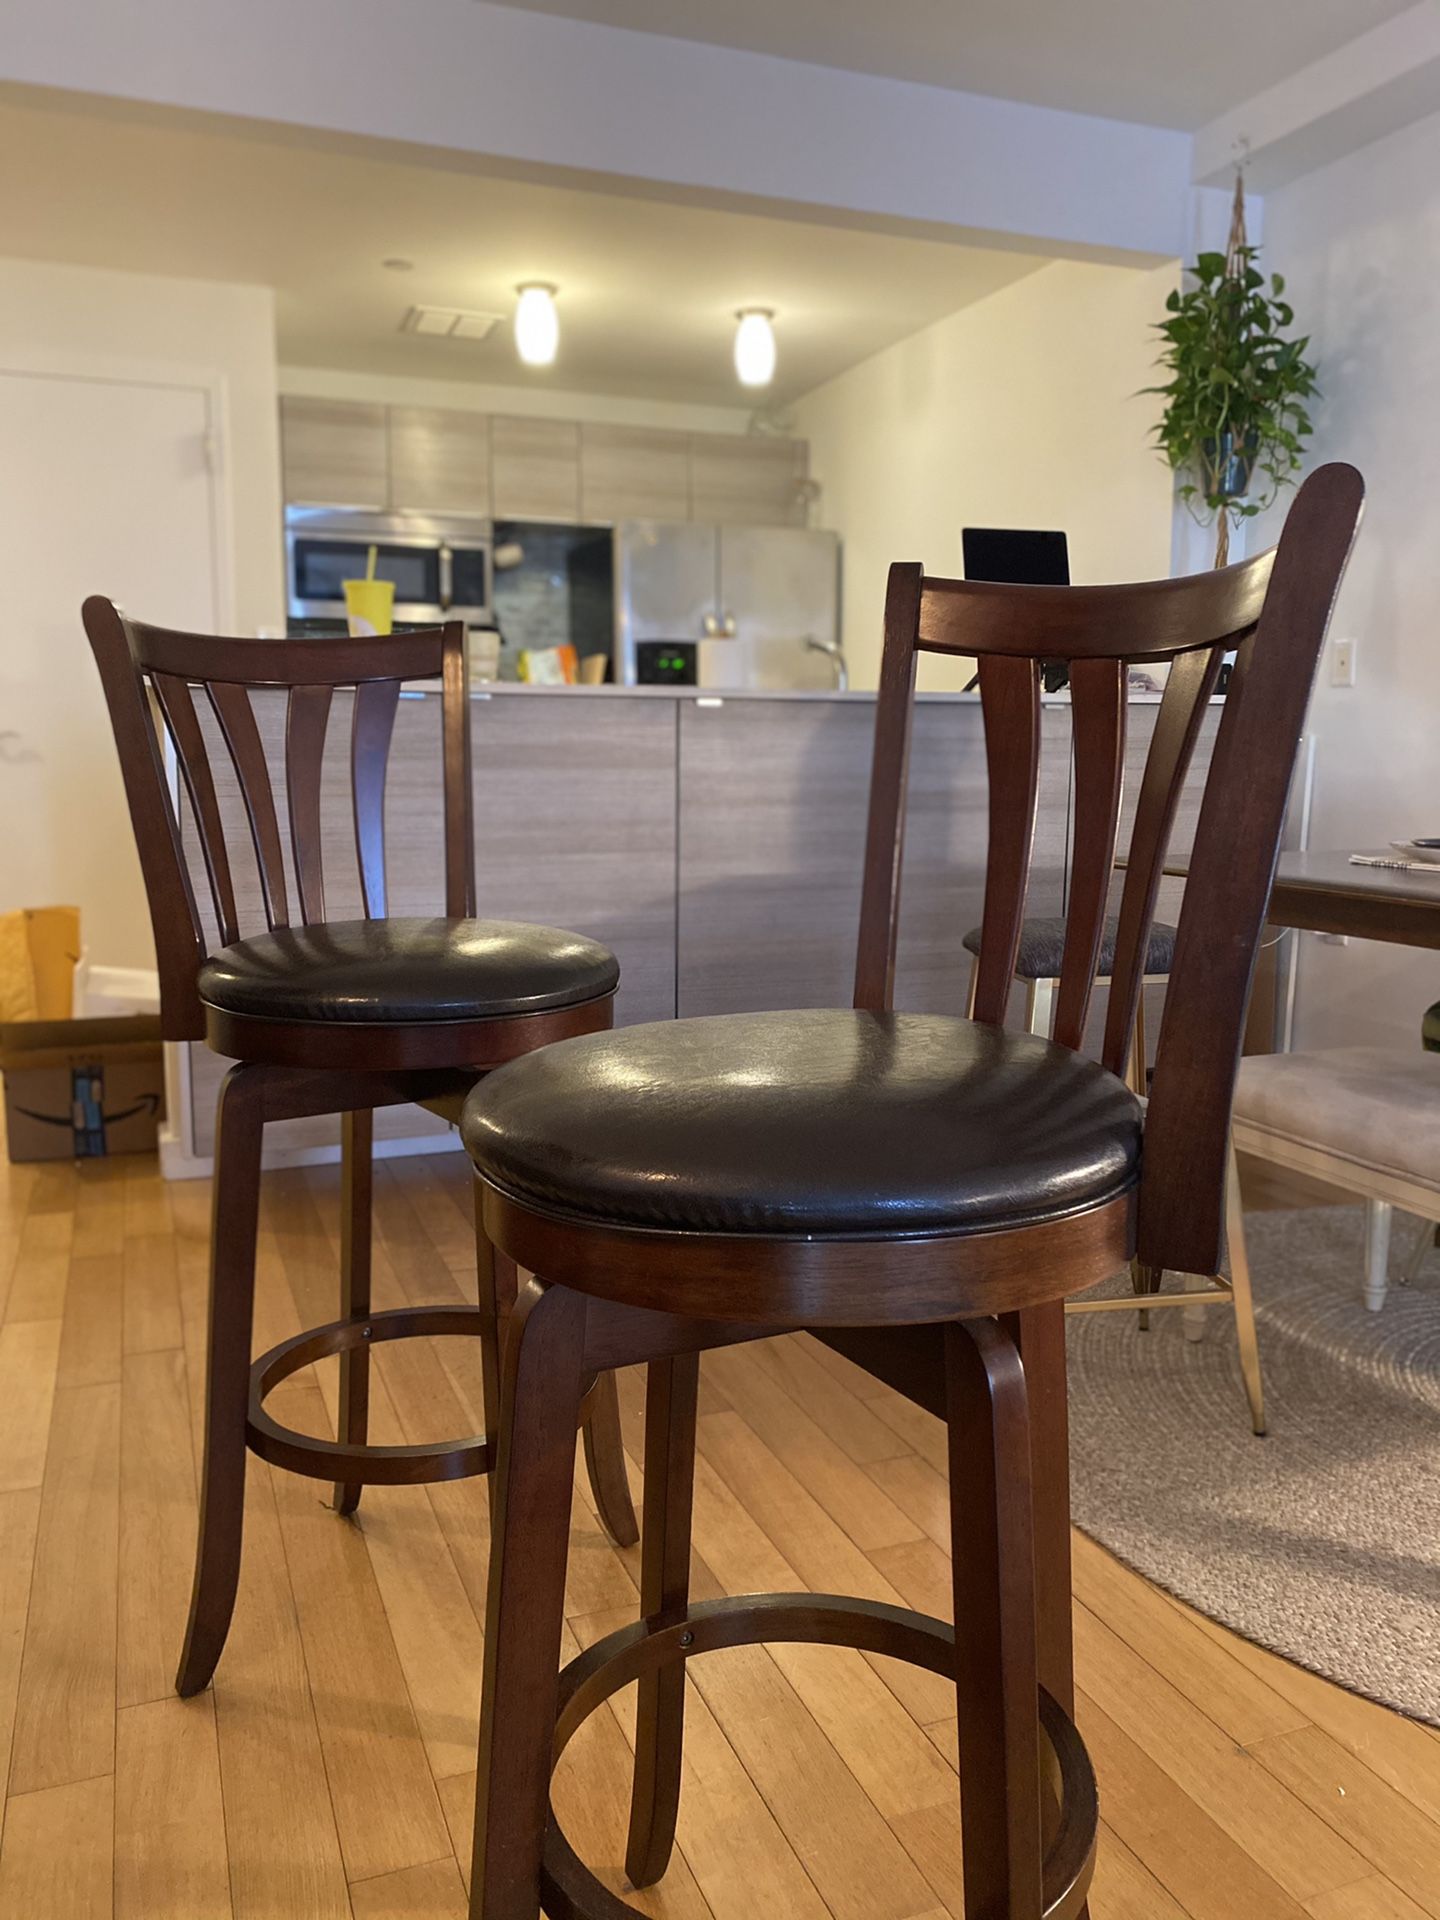 2 Stools - Counter or bar swivel stools, set of 2